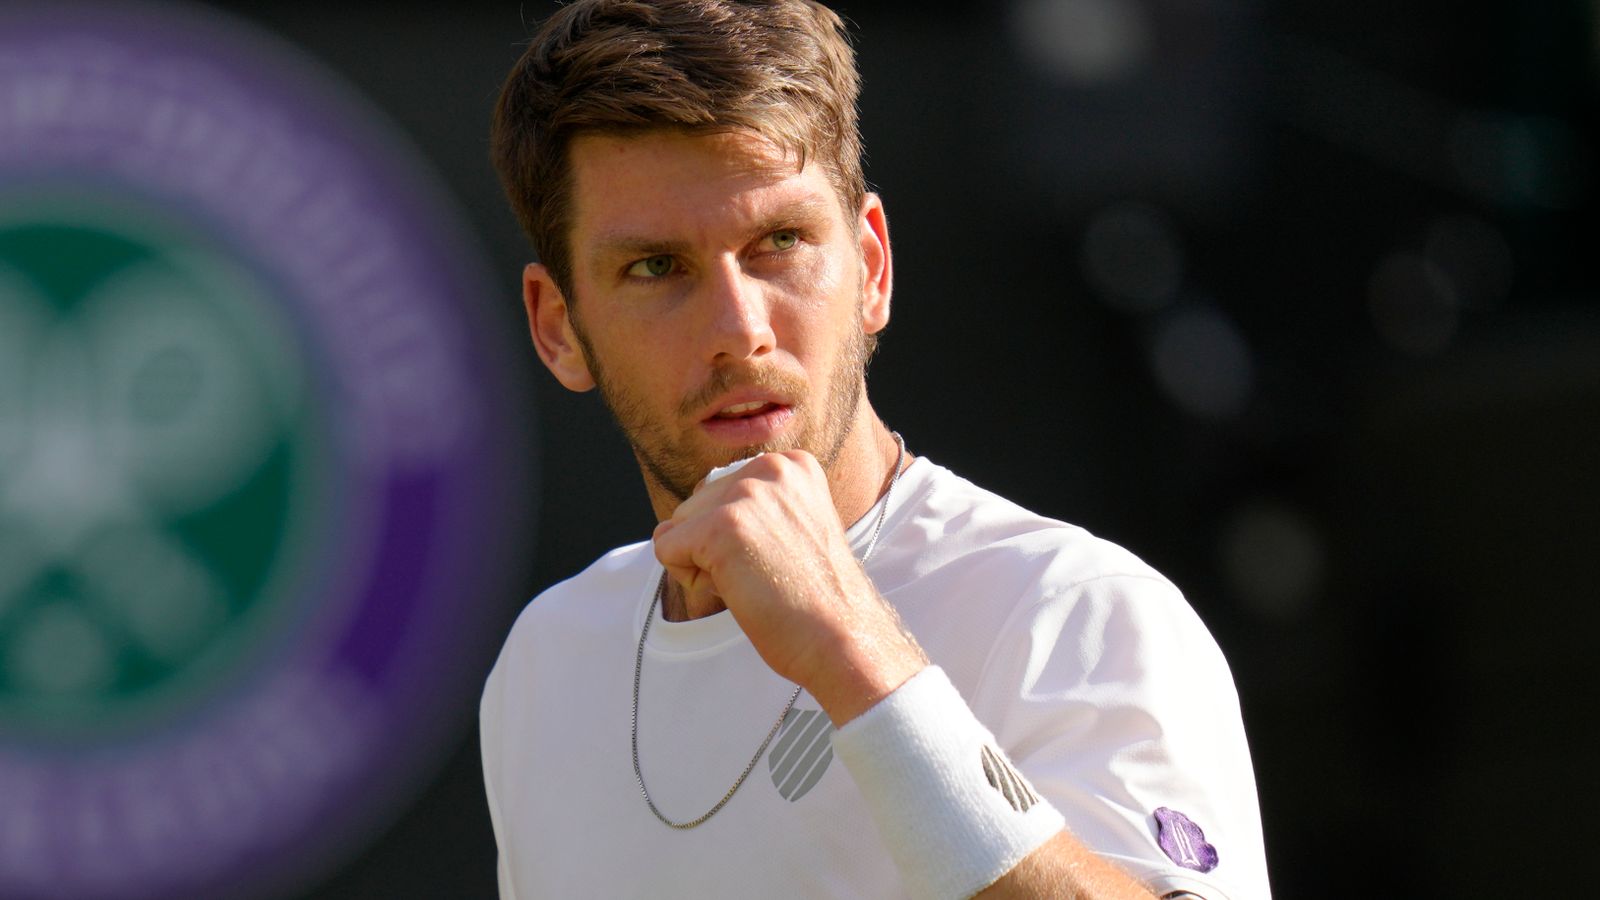 Wimbledon: Cameron Norrie faces Novak Djokovic in semi-final, Nick Kyrgios receives walkover to final | Tennis News